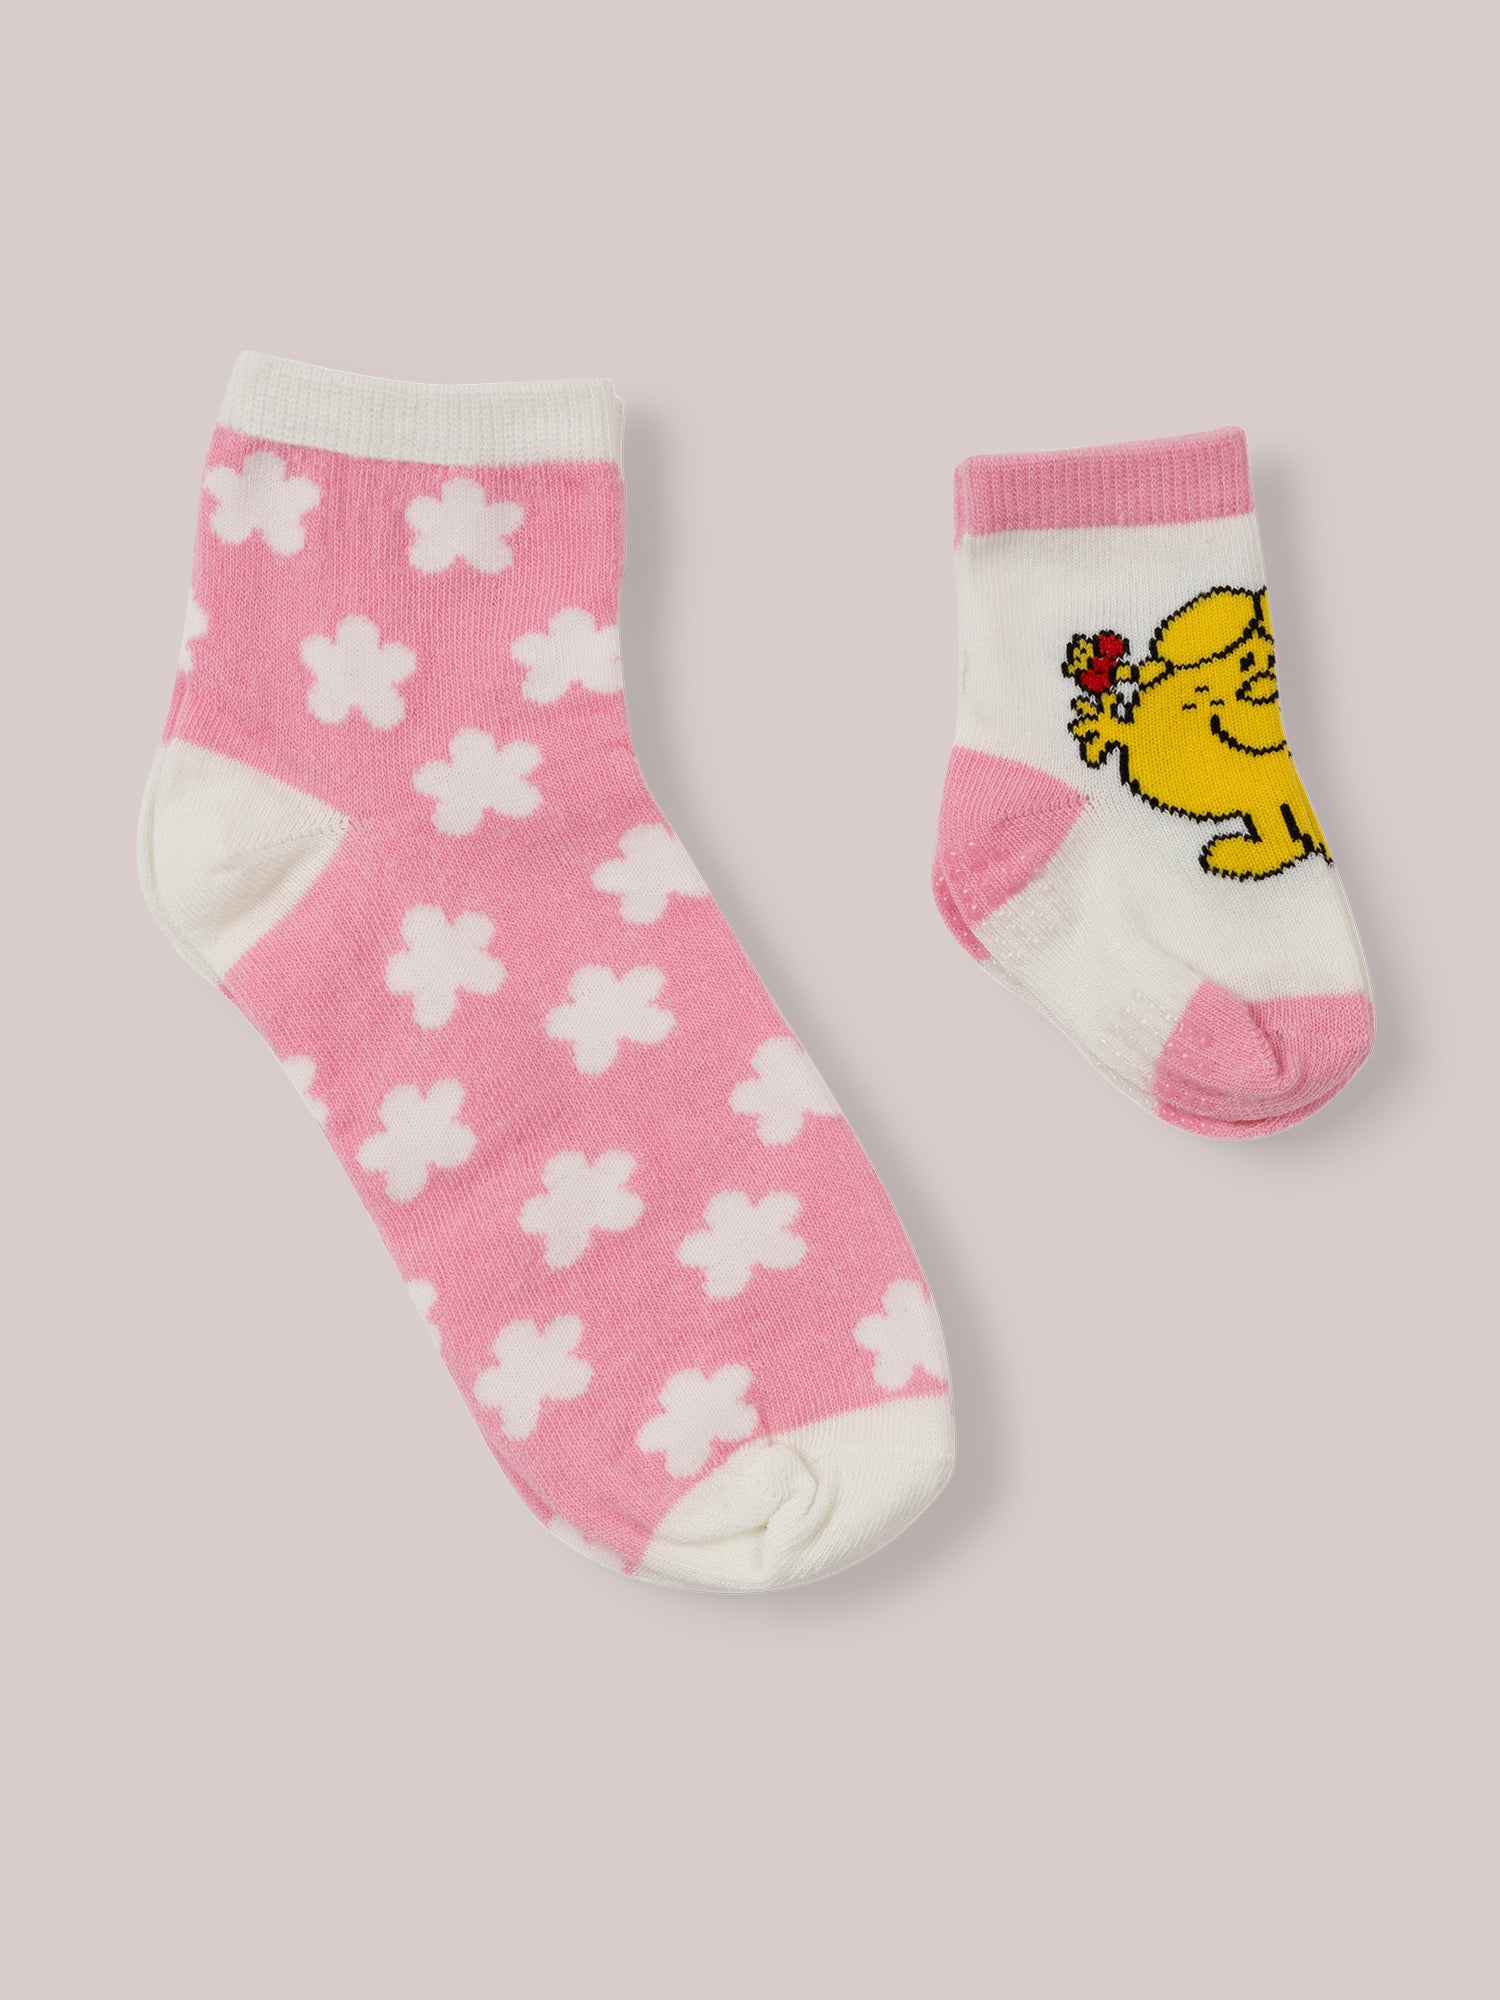 Mama and Baby Little Miss Sunshine socks flat lay